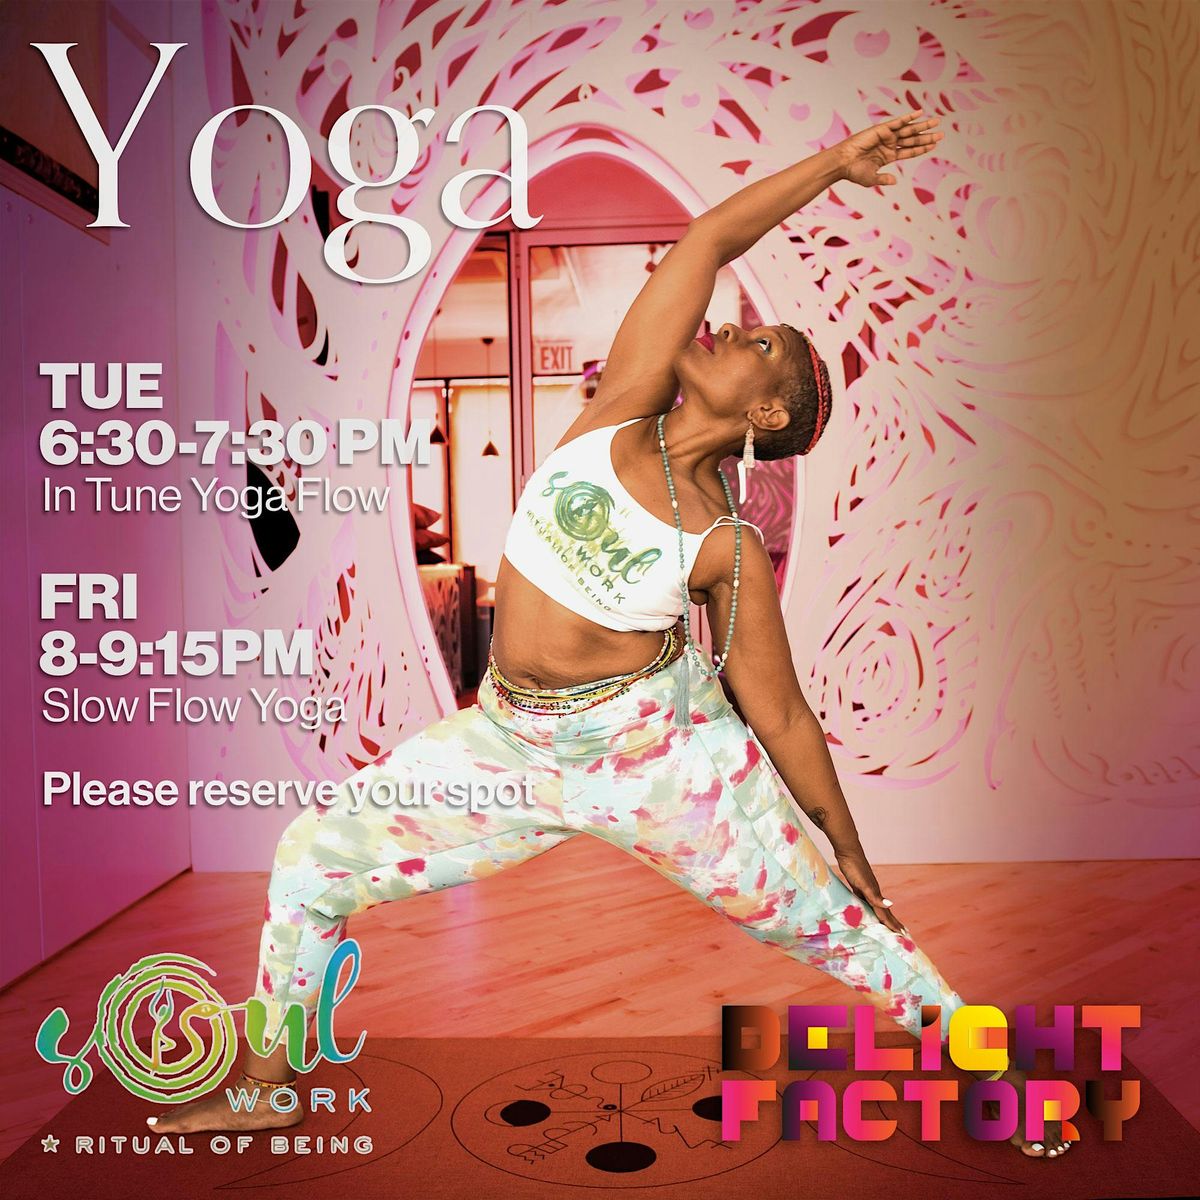 Yoga at Delight Factory - Tuesdays & Fridays